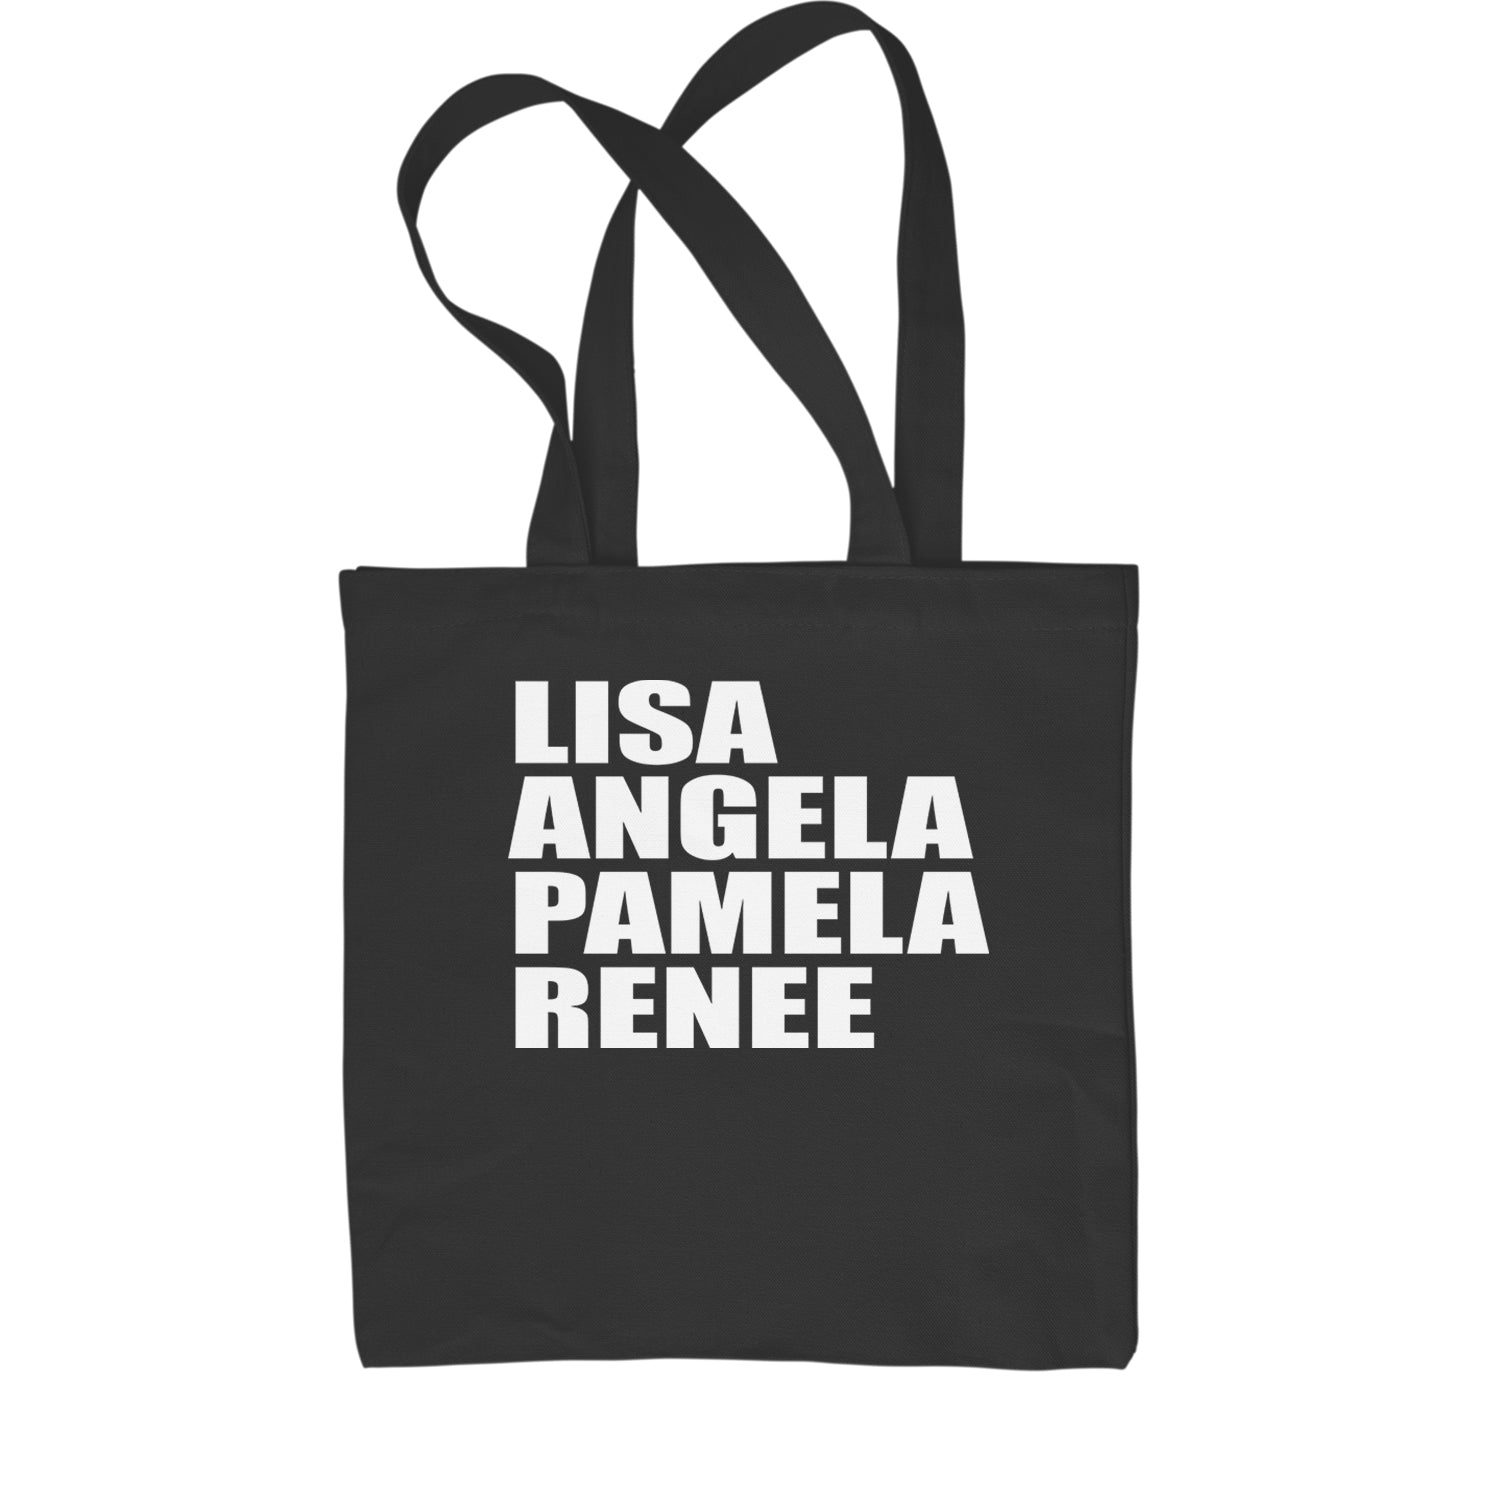 Lisa Angela Pamela Renee Around The Way Girl Shopping Tote Bag